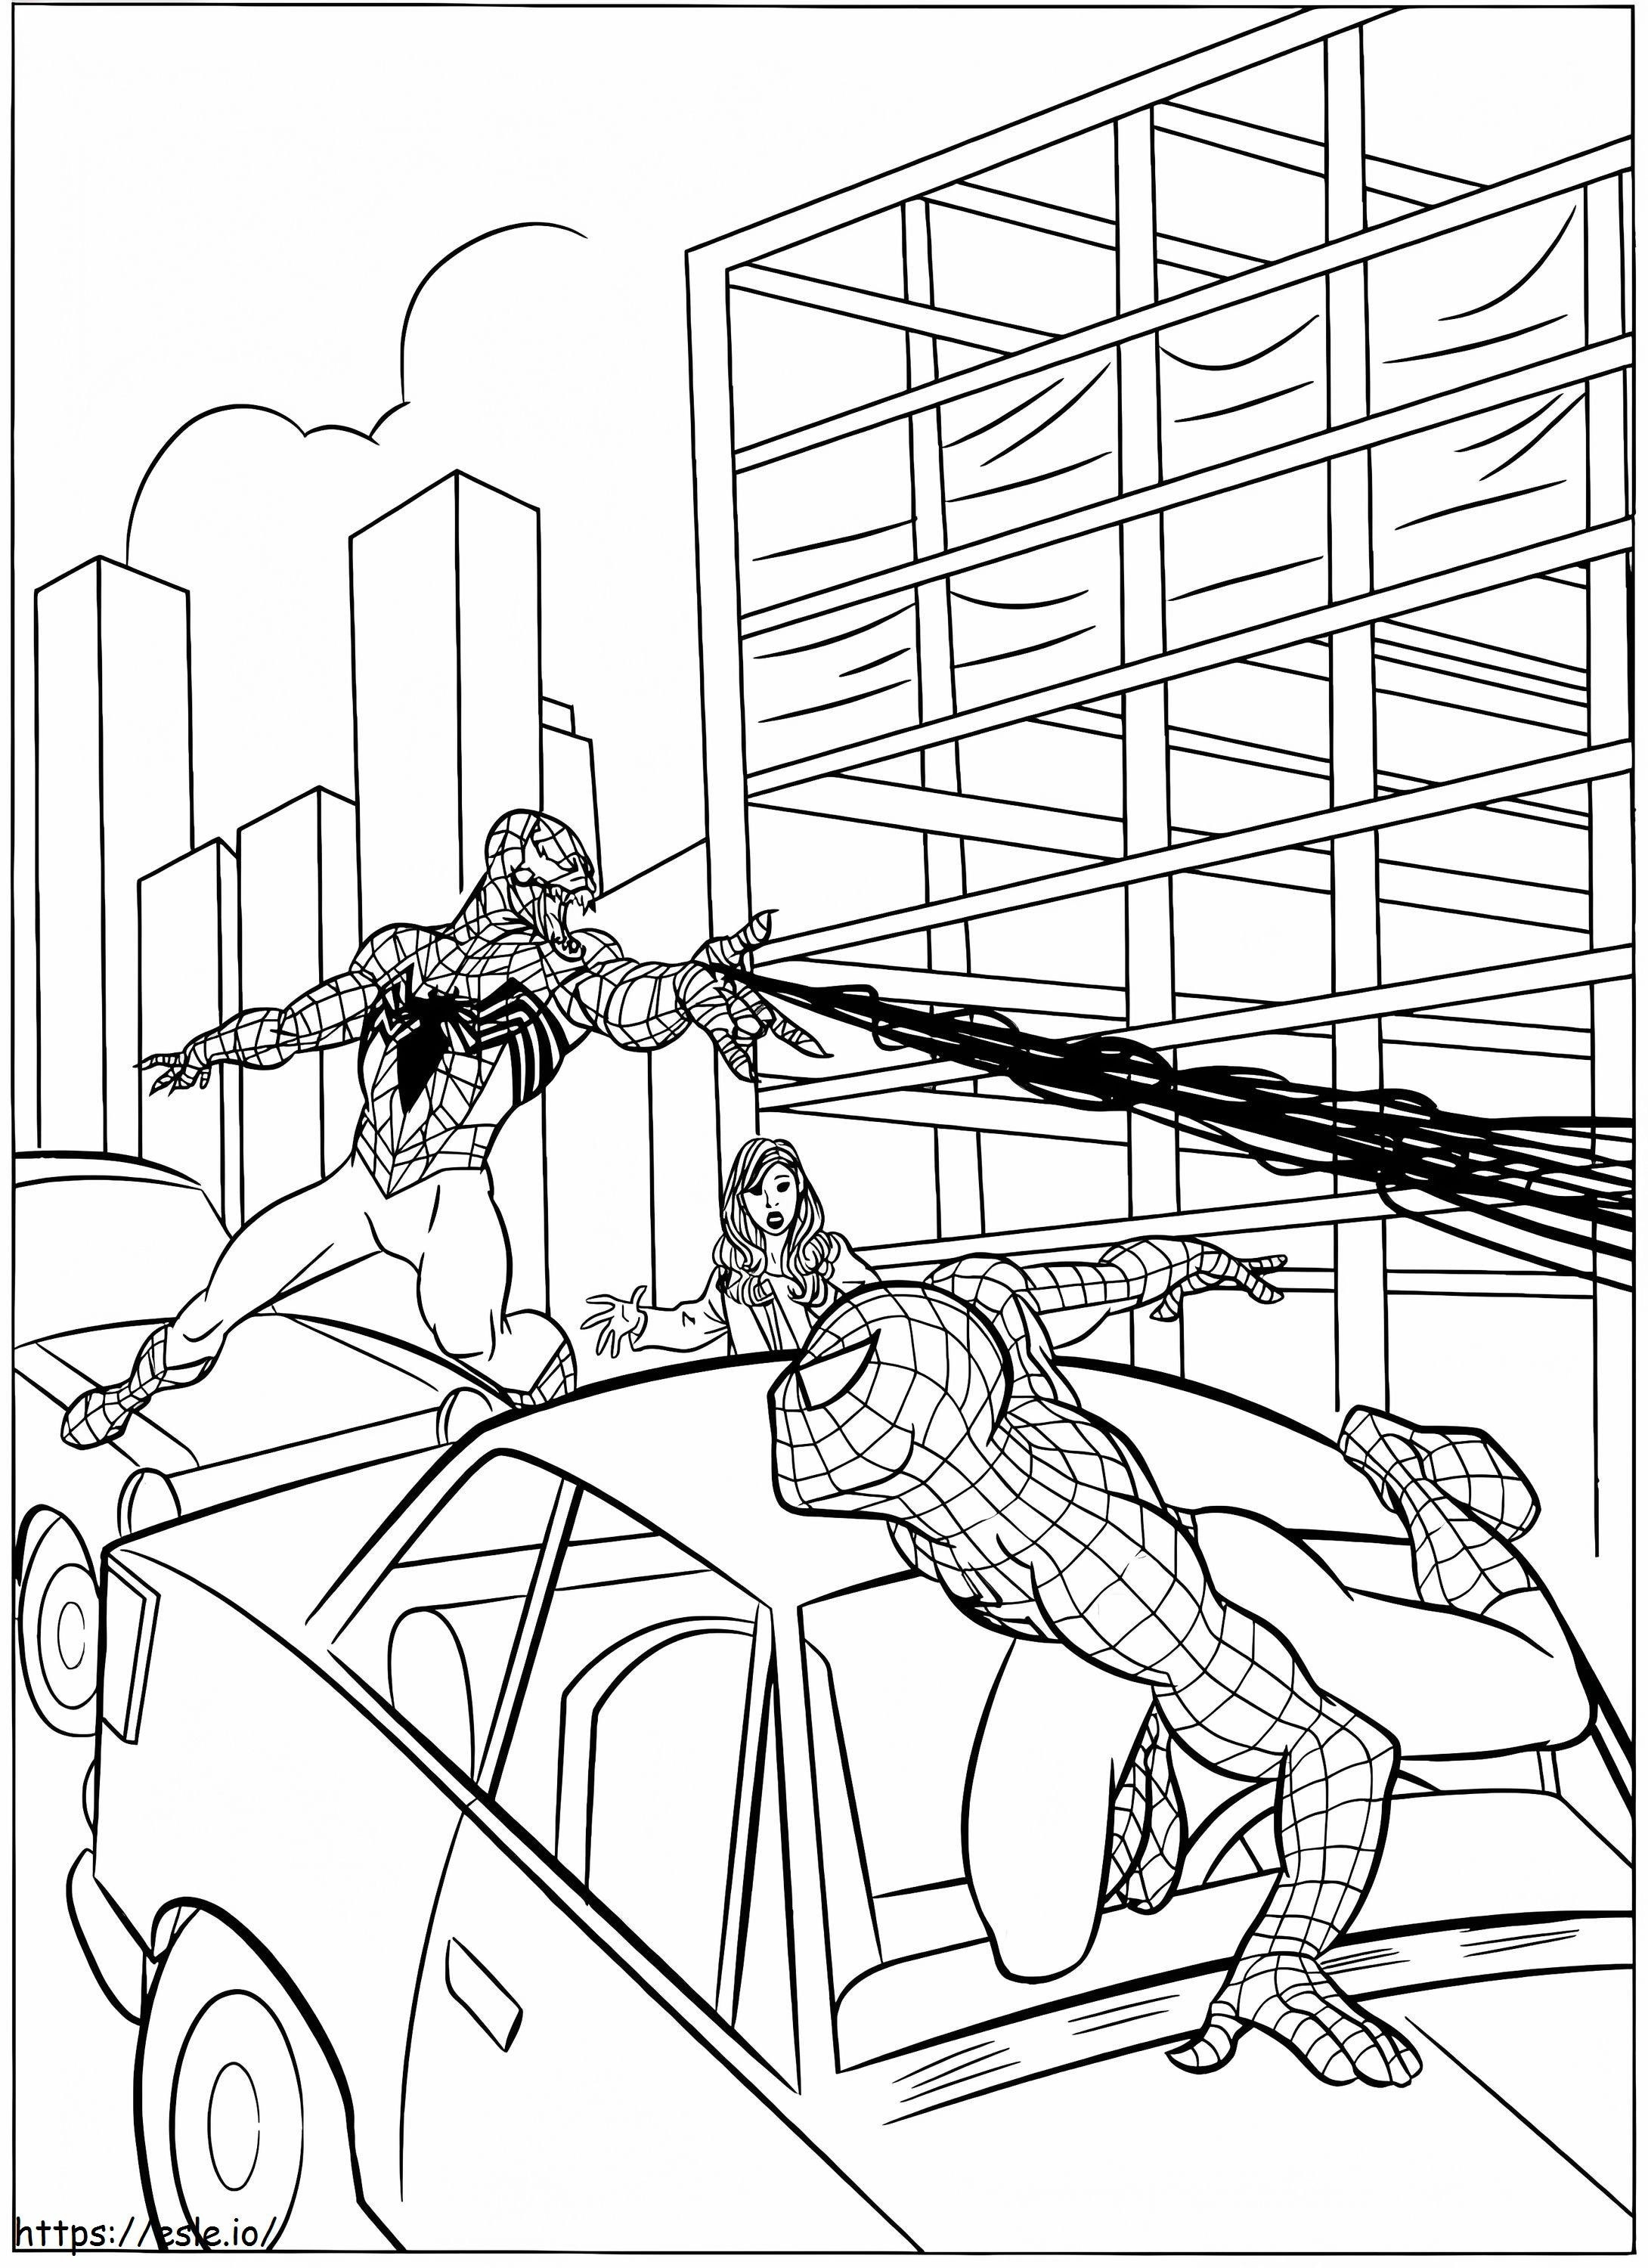 Spiderman Vs Venom coloring page